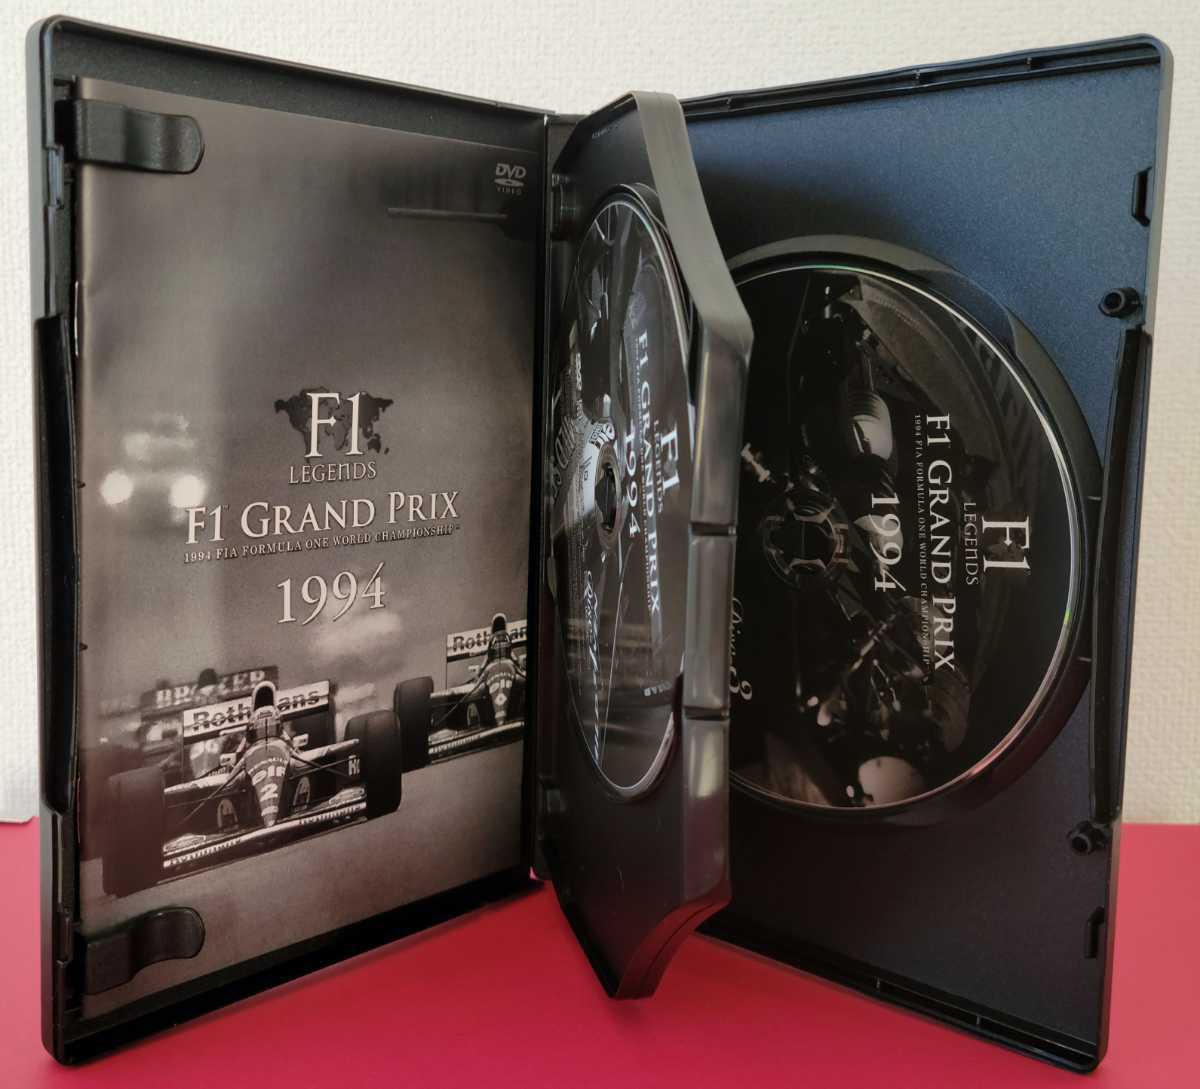 F1 LEGENDS F1 Grand Prix 1994 〈3枚組〉 DVD-